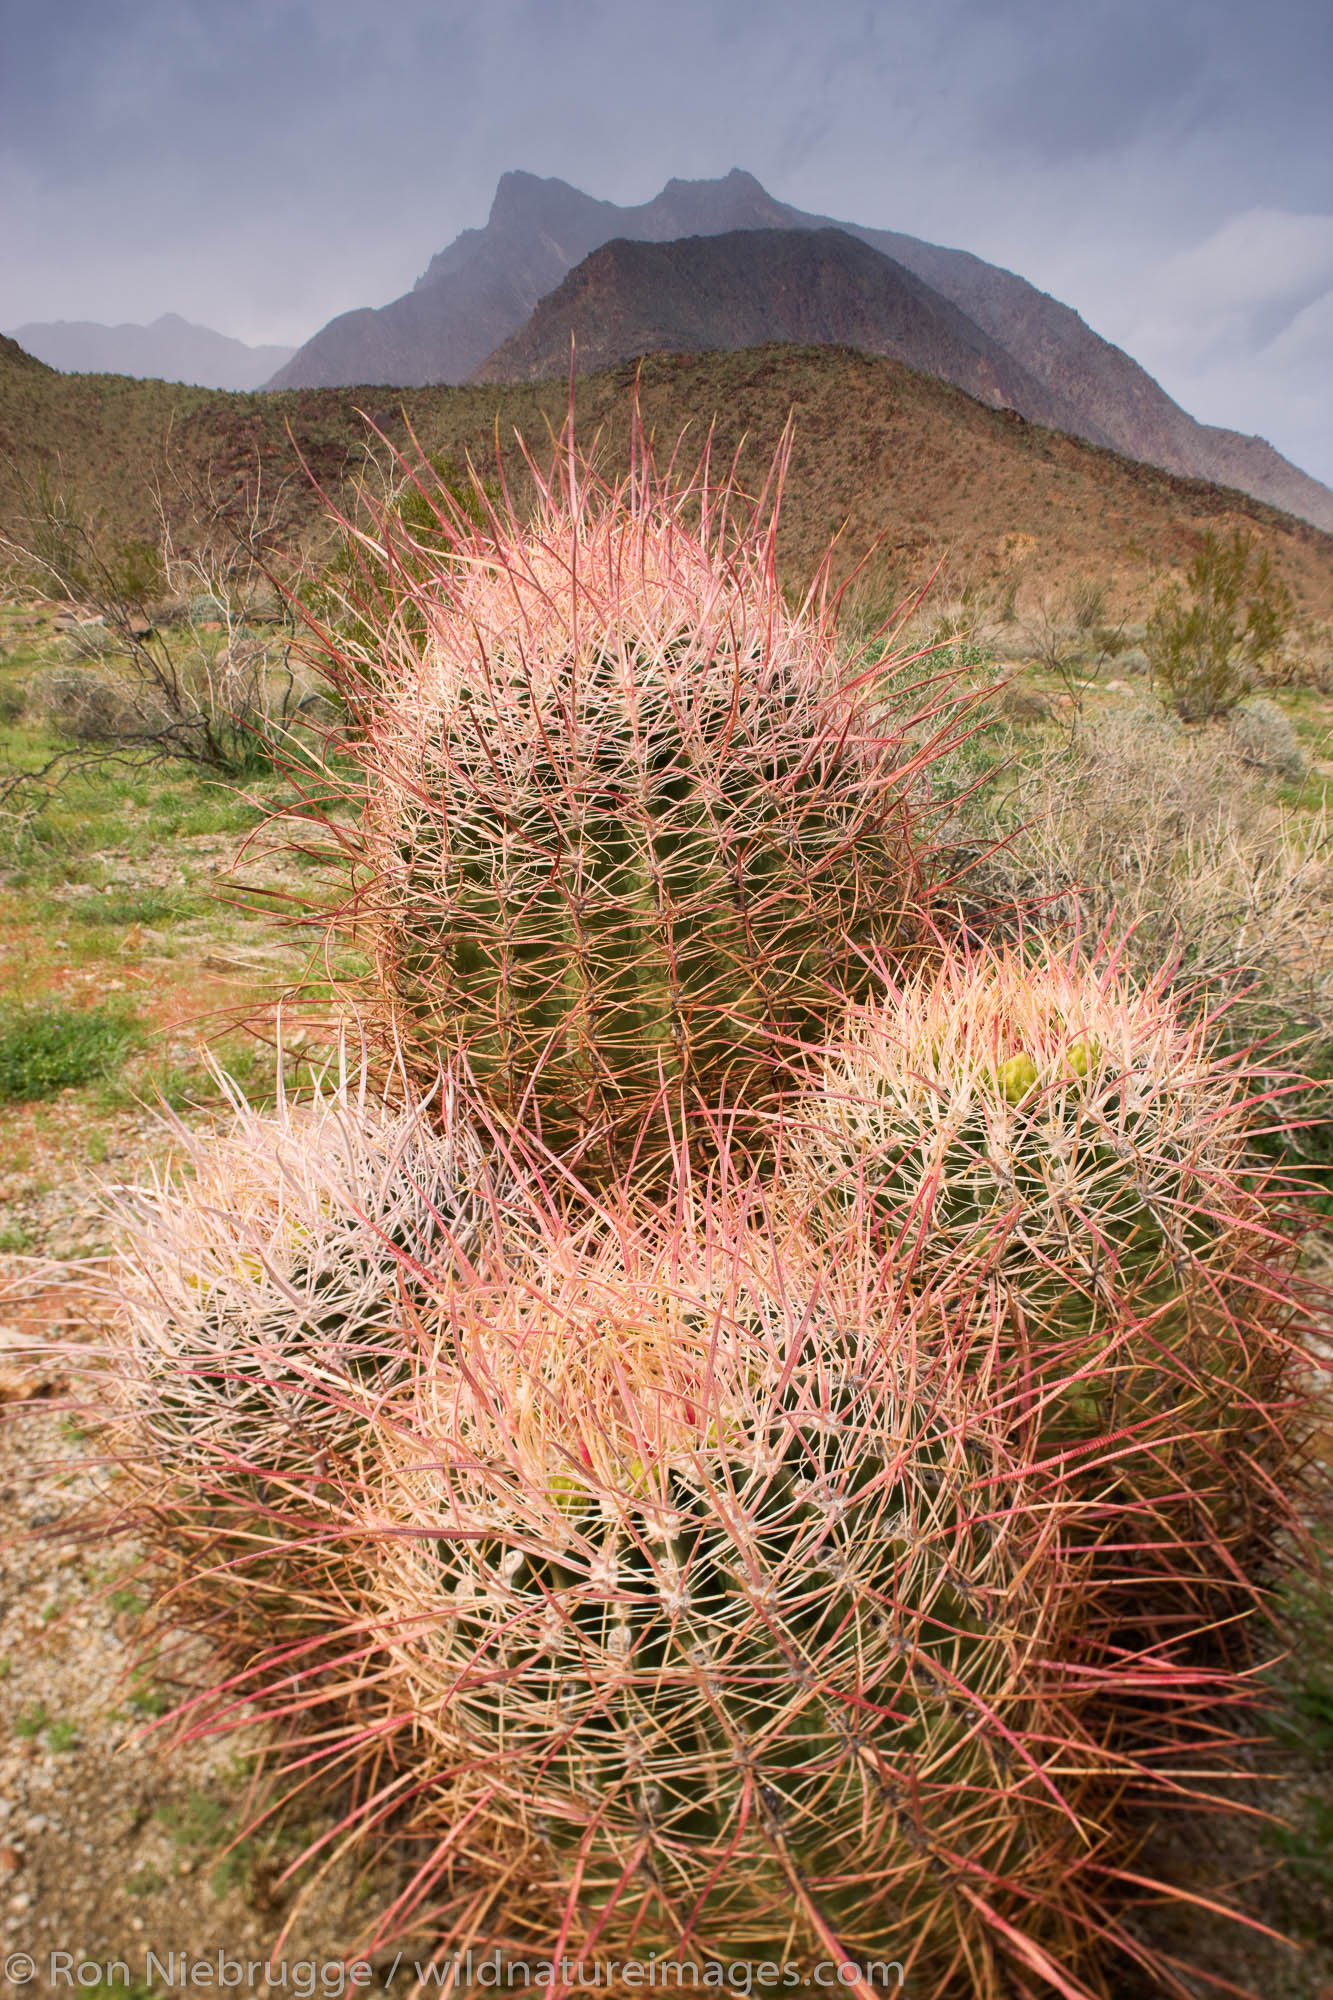 Southwestern Barrel Cactus (Ferocatus wislizenii) and the mountains near Hellhole Canyon during a storm, Anza-Borrego Desert...